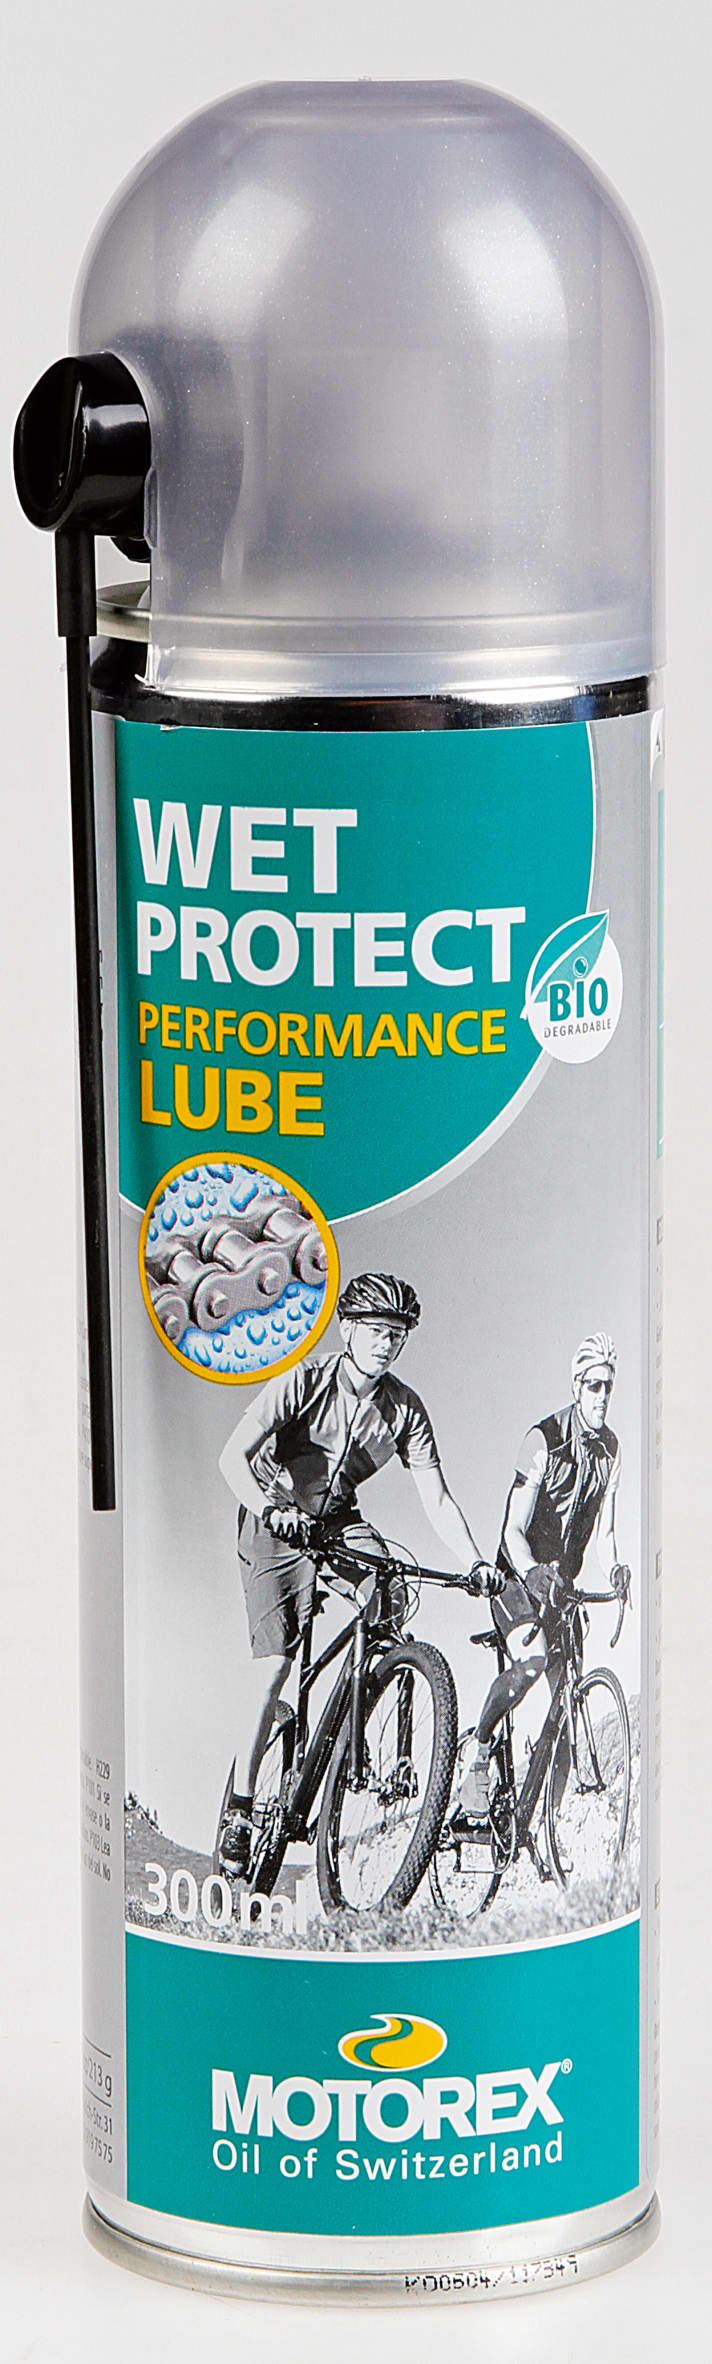   Motorex Wet Protect